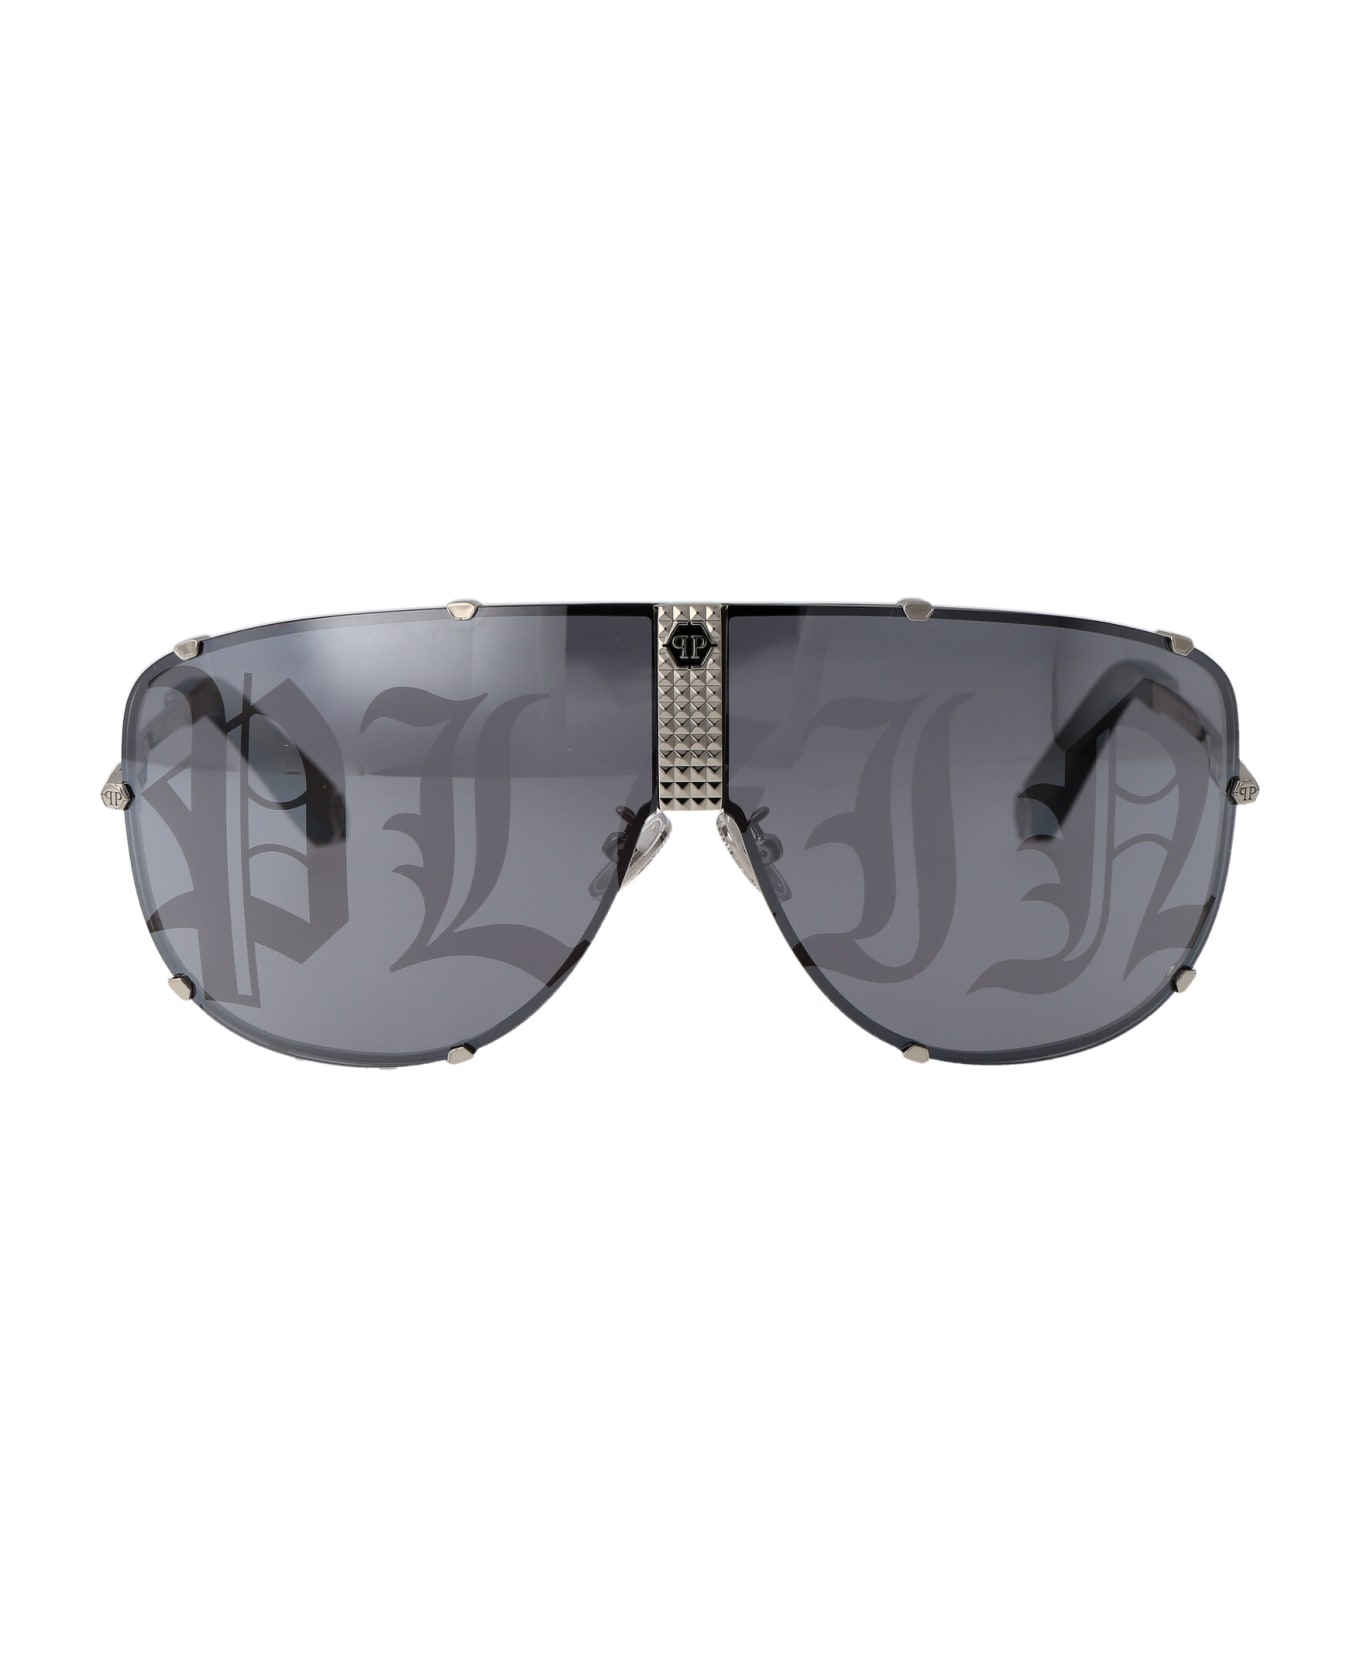 Philipp Plein Spp075m Sunglasses - 579L GREY サングラス